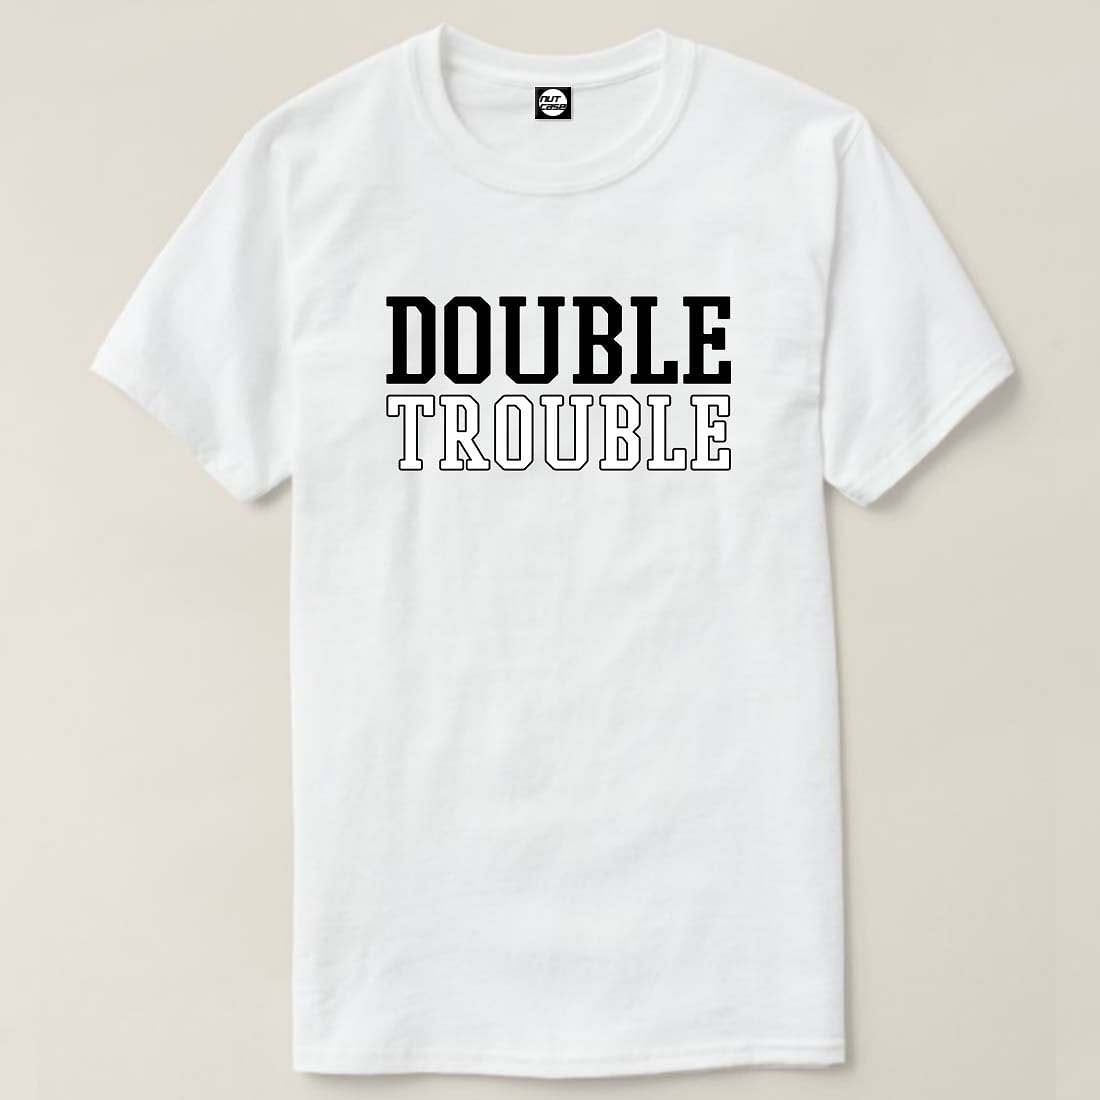 Nutcase Designer Round Neck Men's T-Shirt Wrinkle-Free Poly Cotton Tees - Double Trouble Nutcase